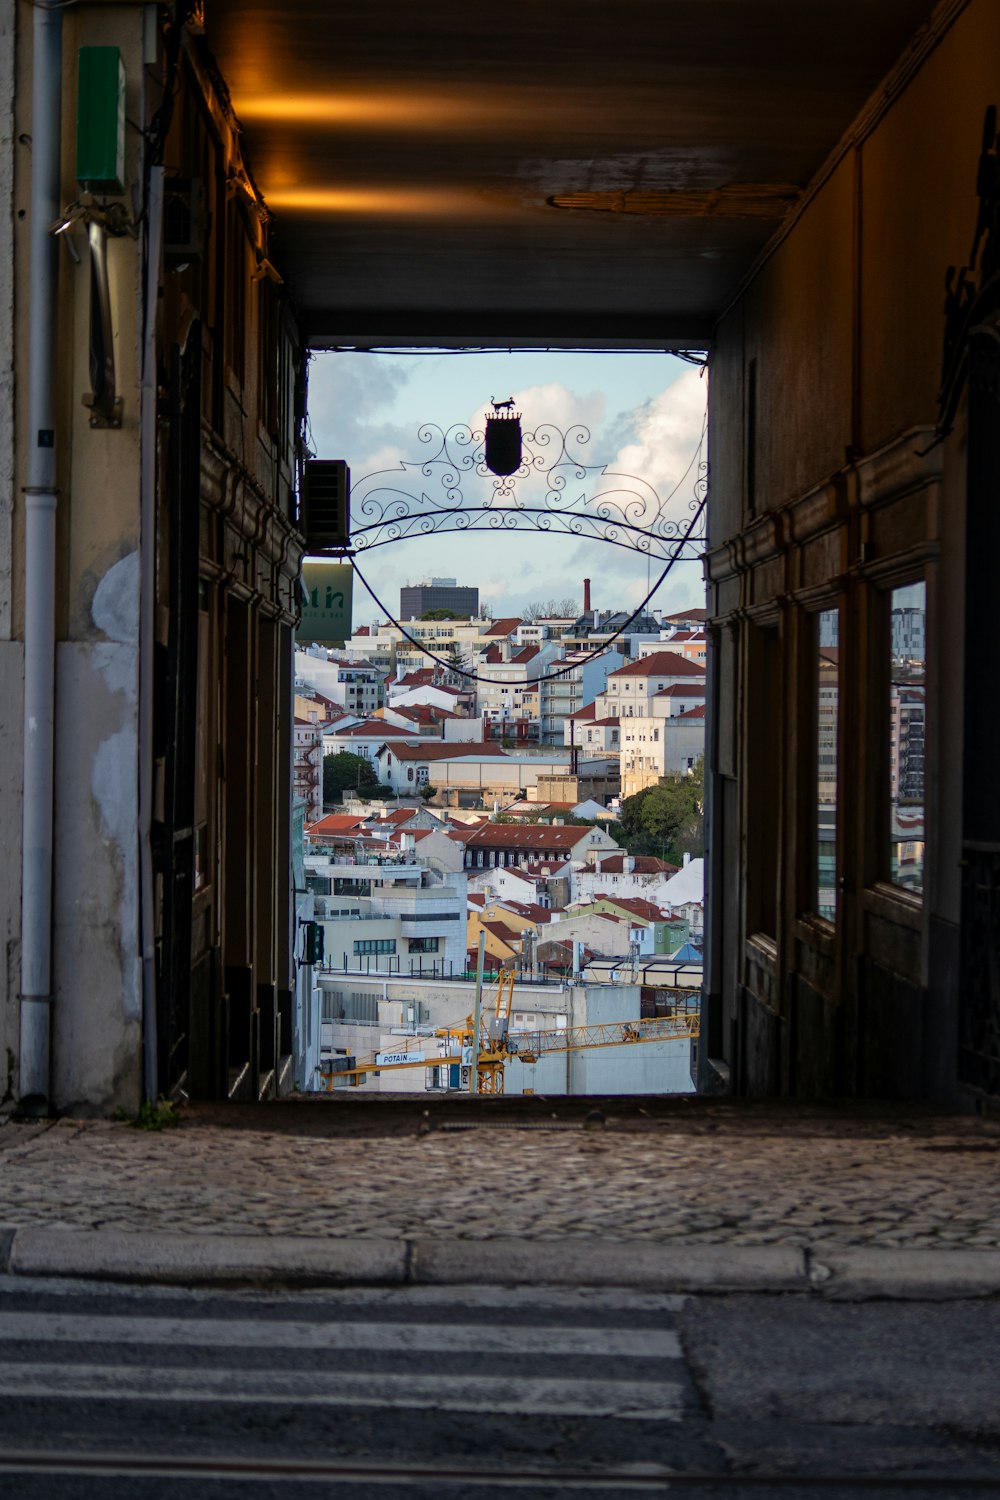 a view of a city through an open door